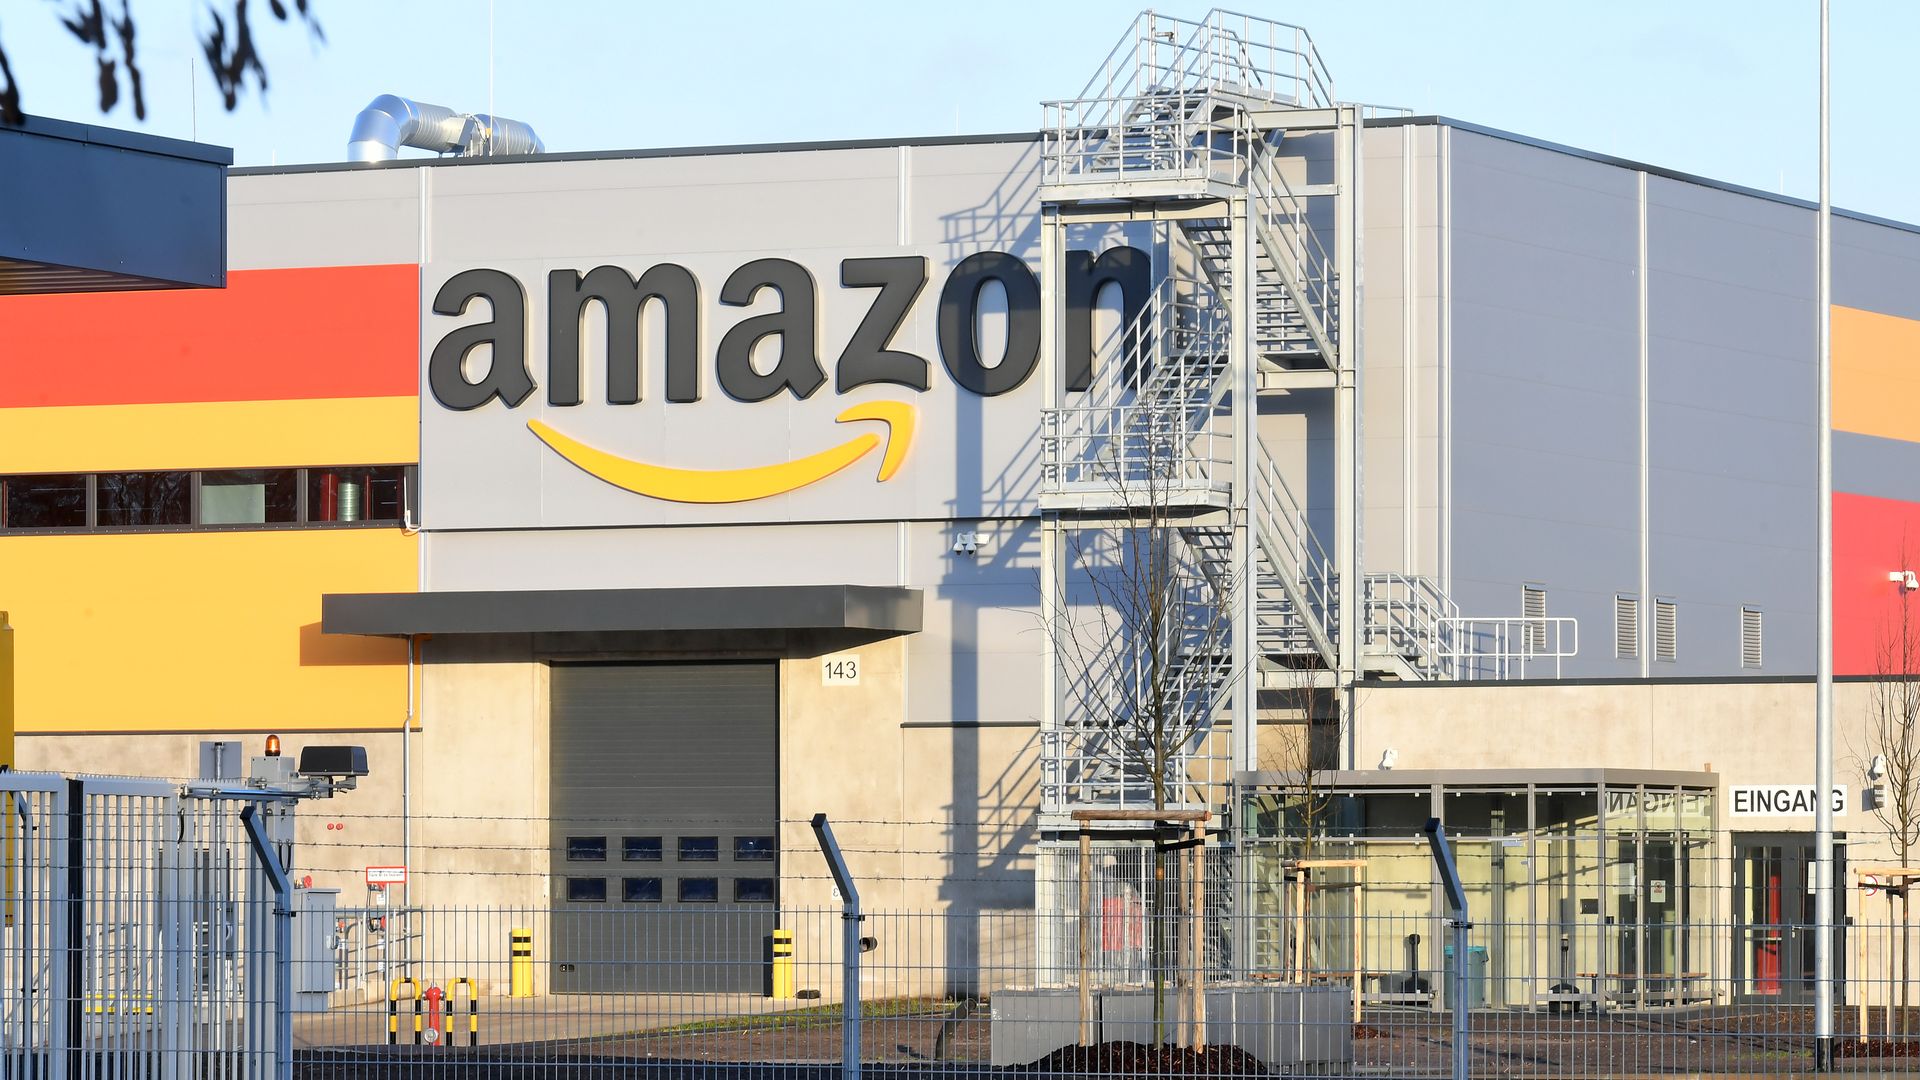 Amazon distribution center building exterior with logo